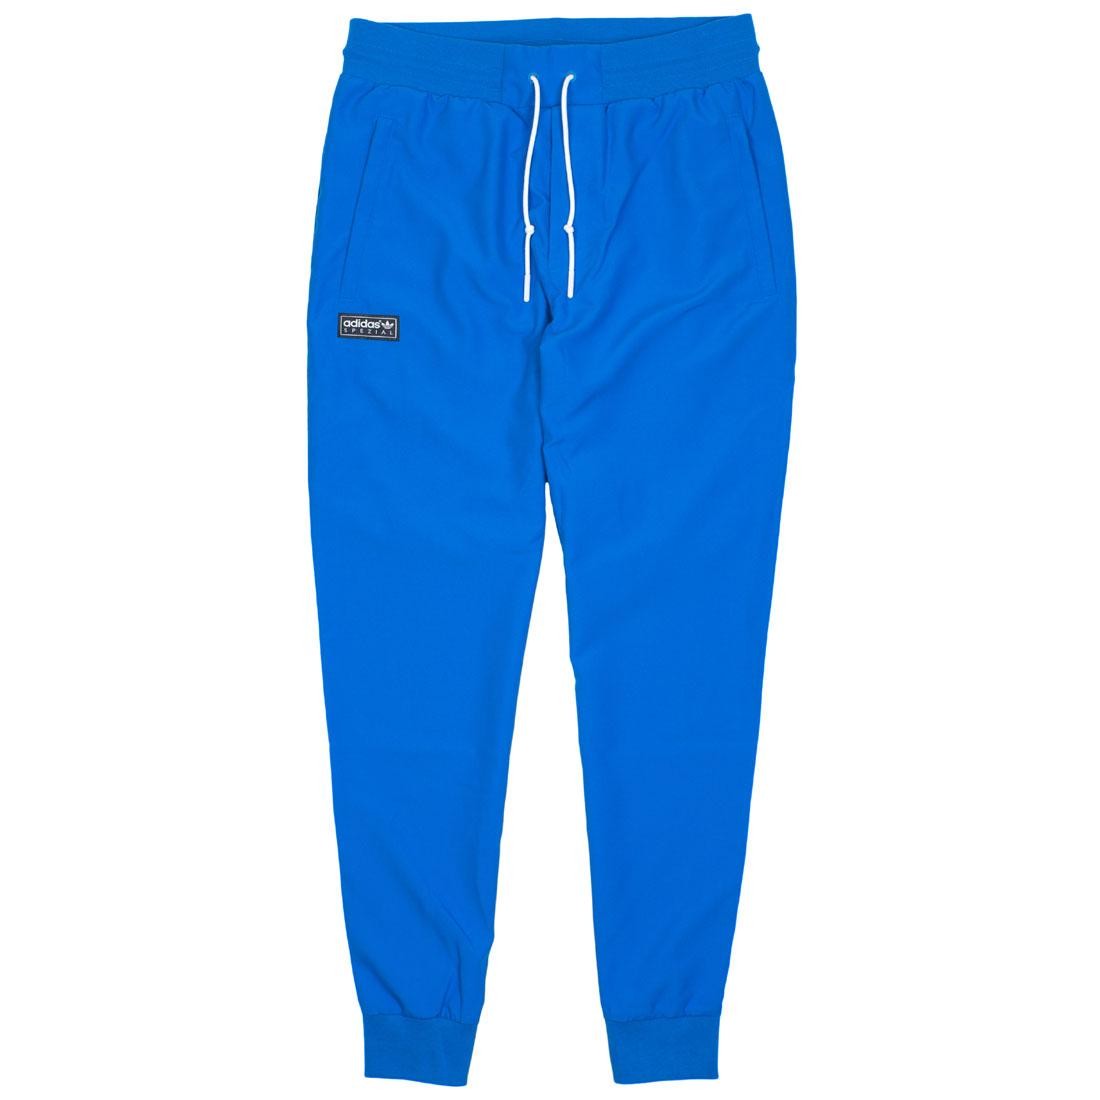 Adidas Men Cardle Track Pants blue bluebird